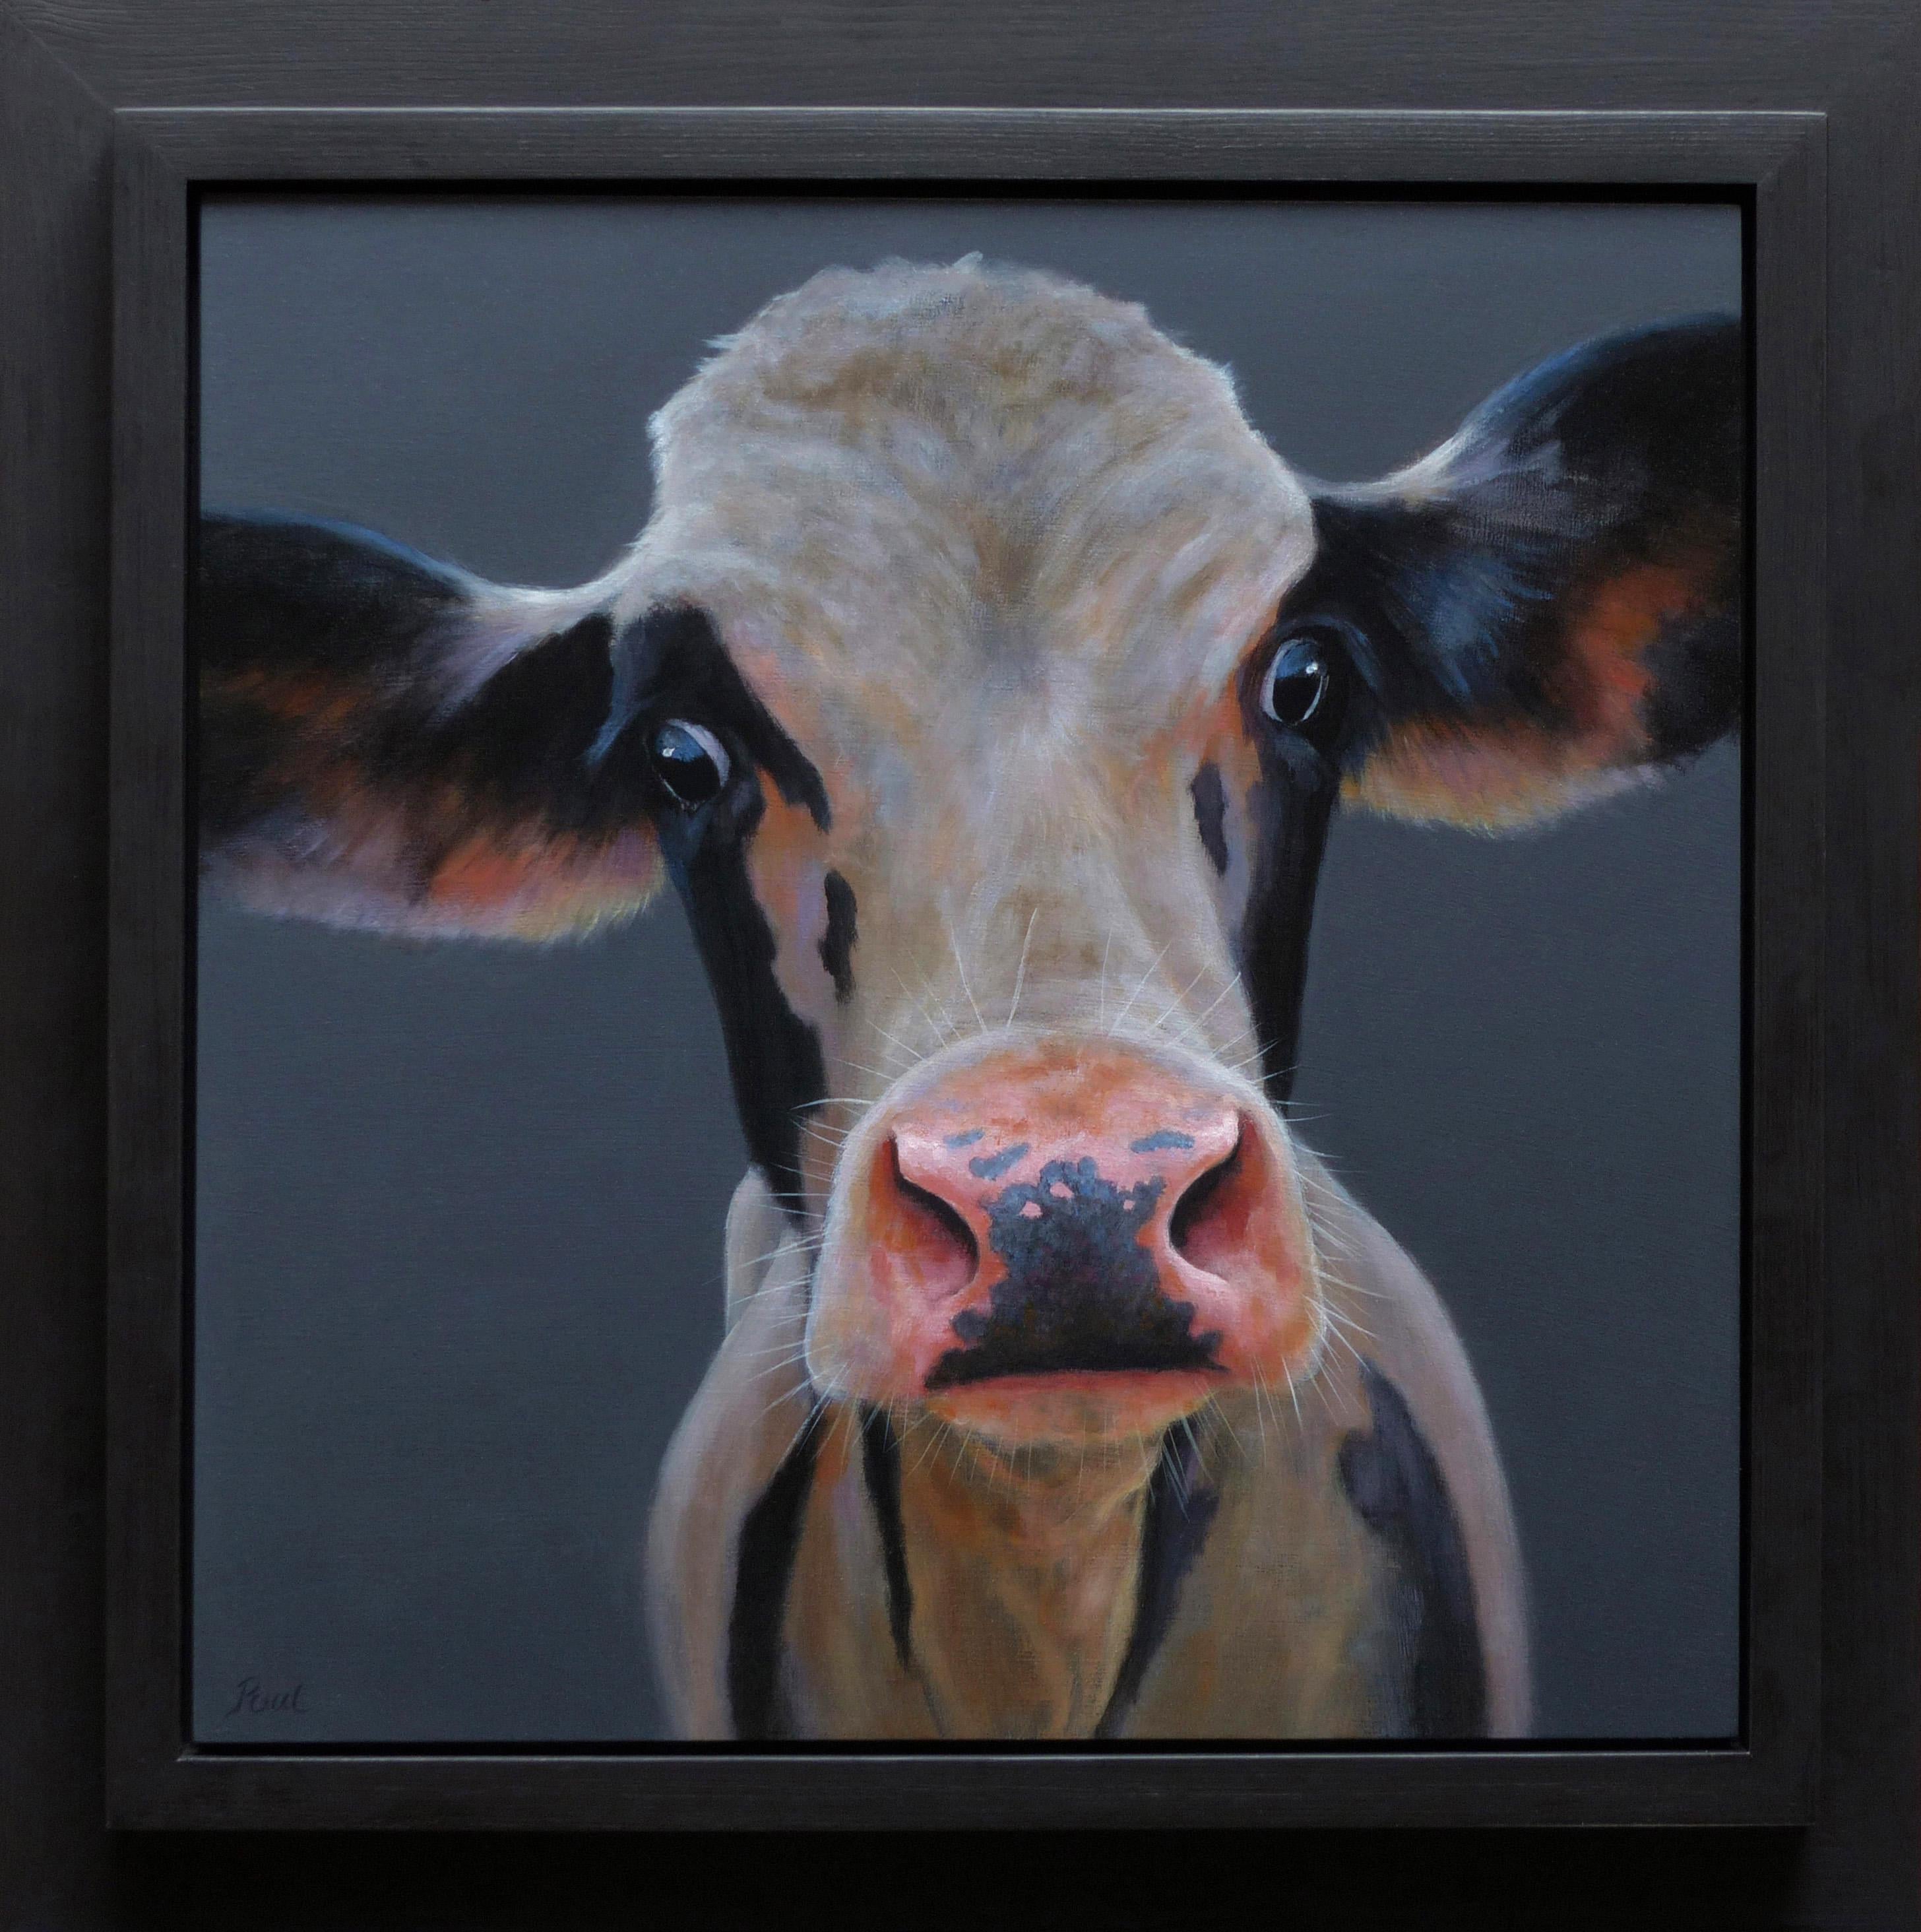 Paul Jansen Figurative Painting - "Portrait 418" Contemporary Dutch Oil Painting of a Black & White Calf, Cow